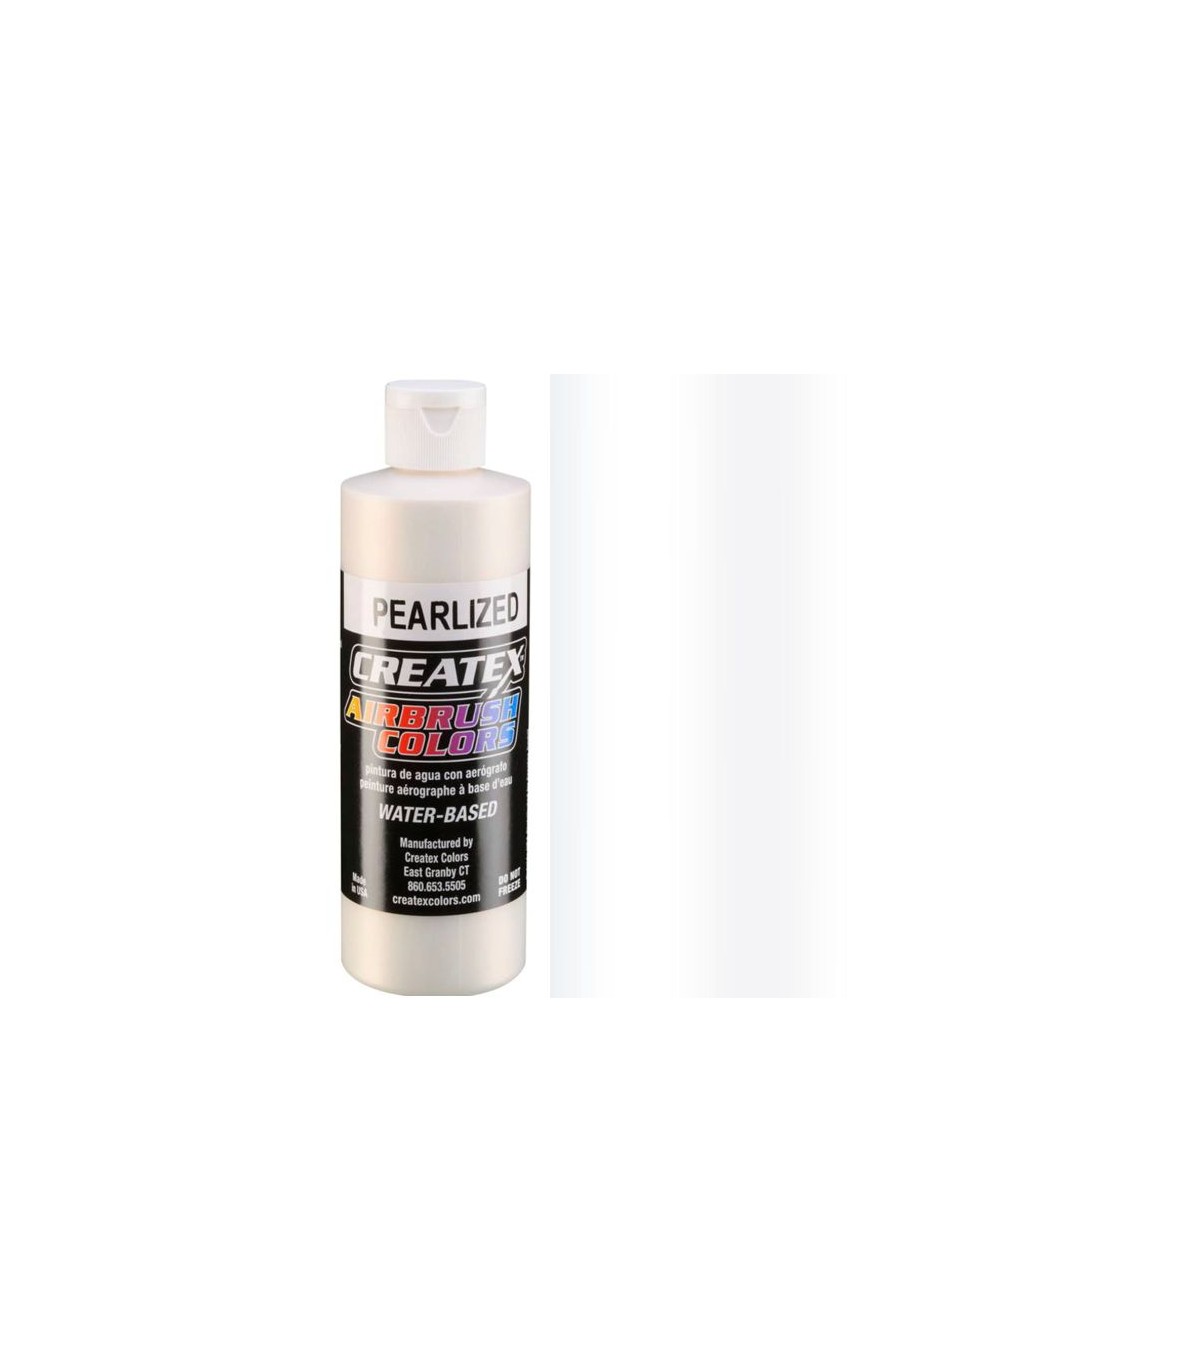 Createx Airbrush Colors Pearl White 5310